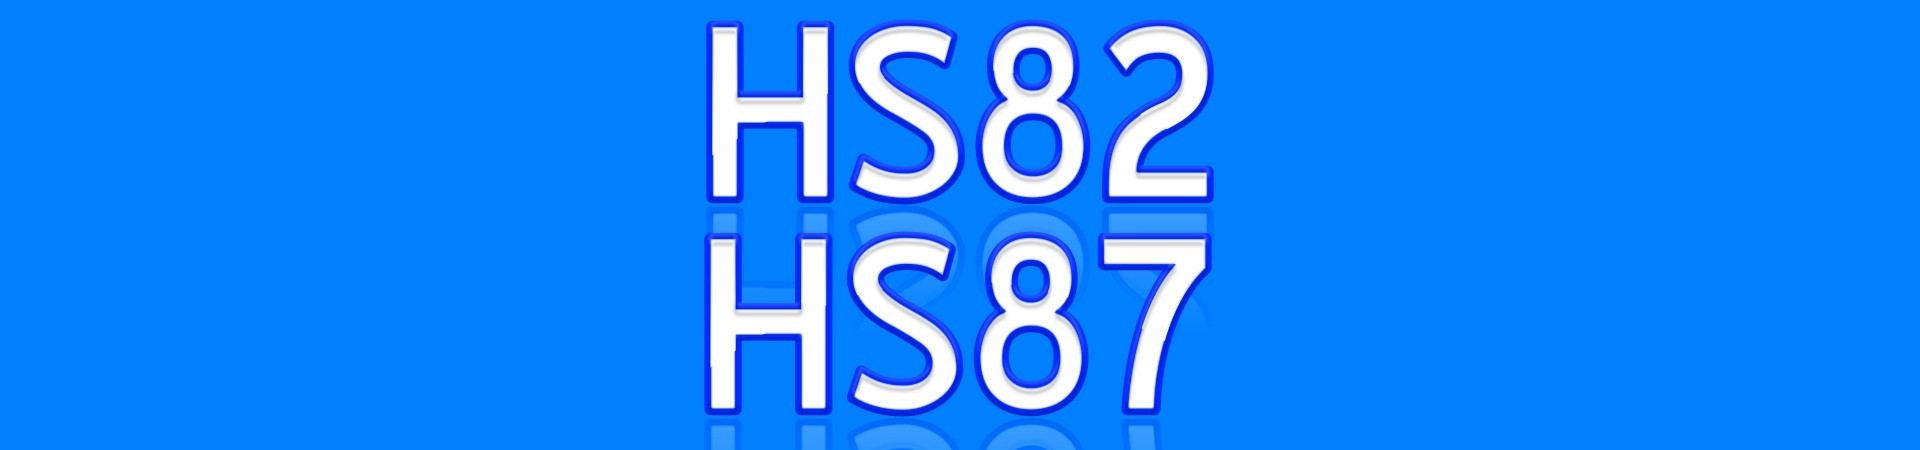 REPUESTOS para Cortasetos STIHL HS82 HS87